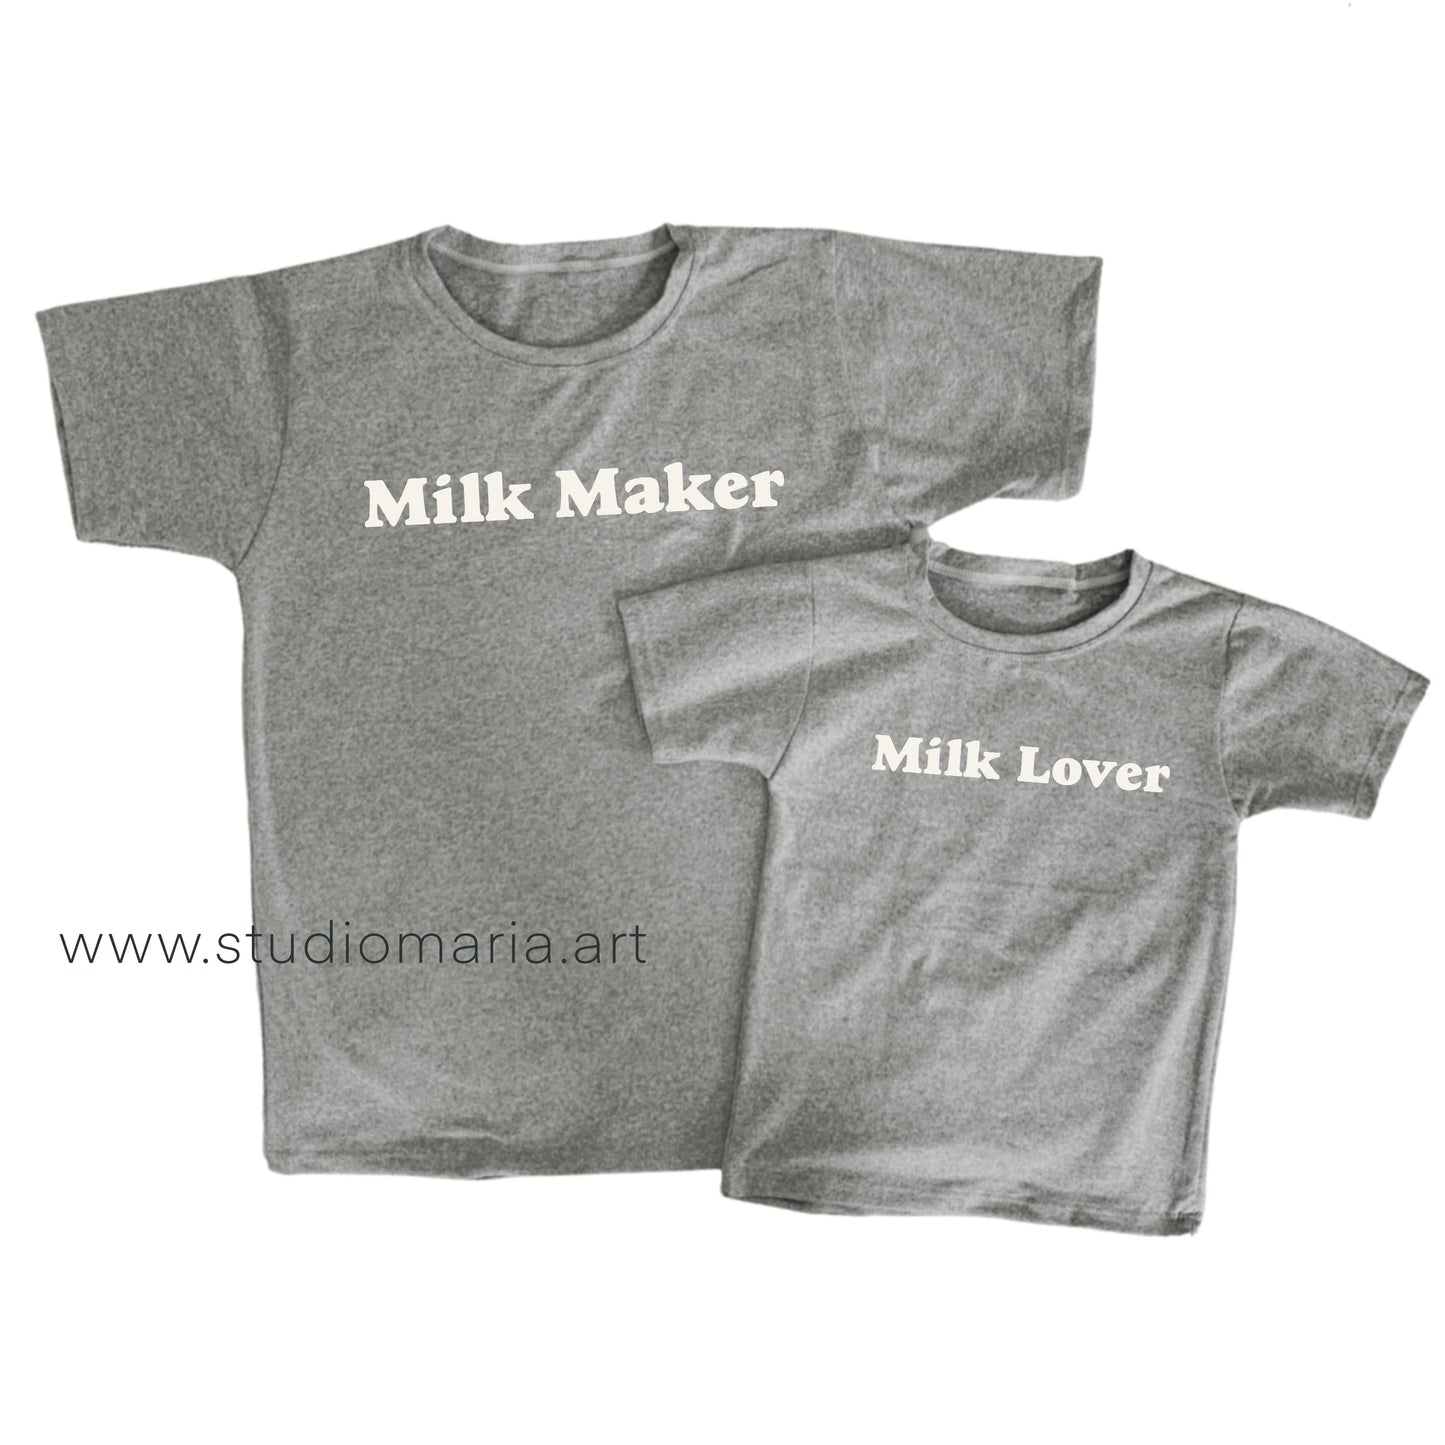 Milk Maker / Milk Lover Mommy and Me Shirt Set